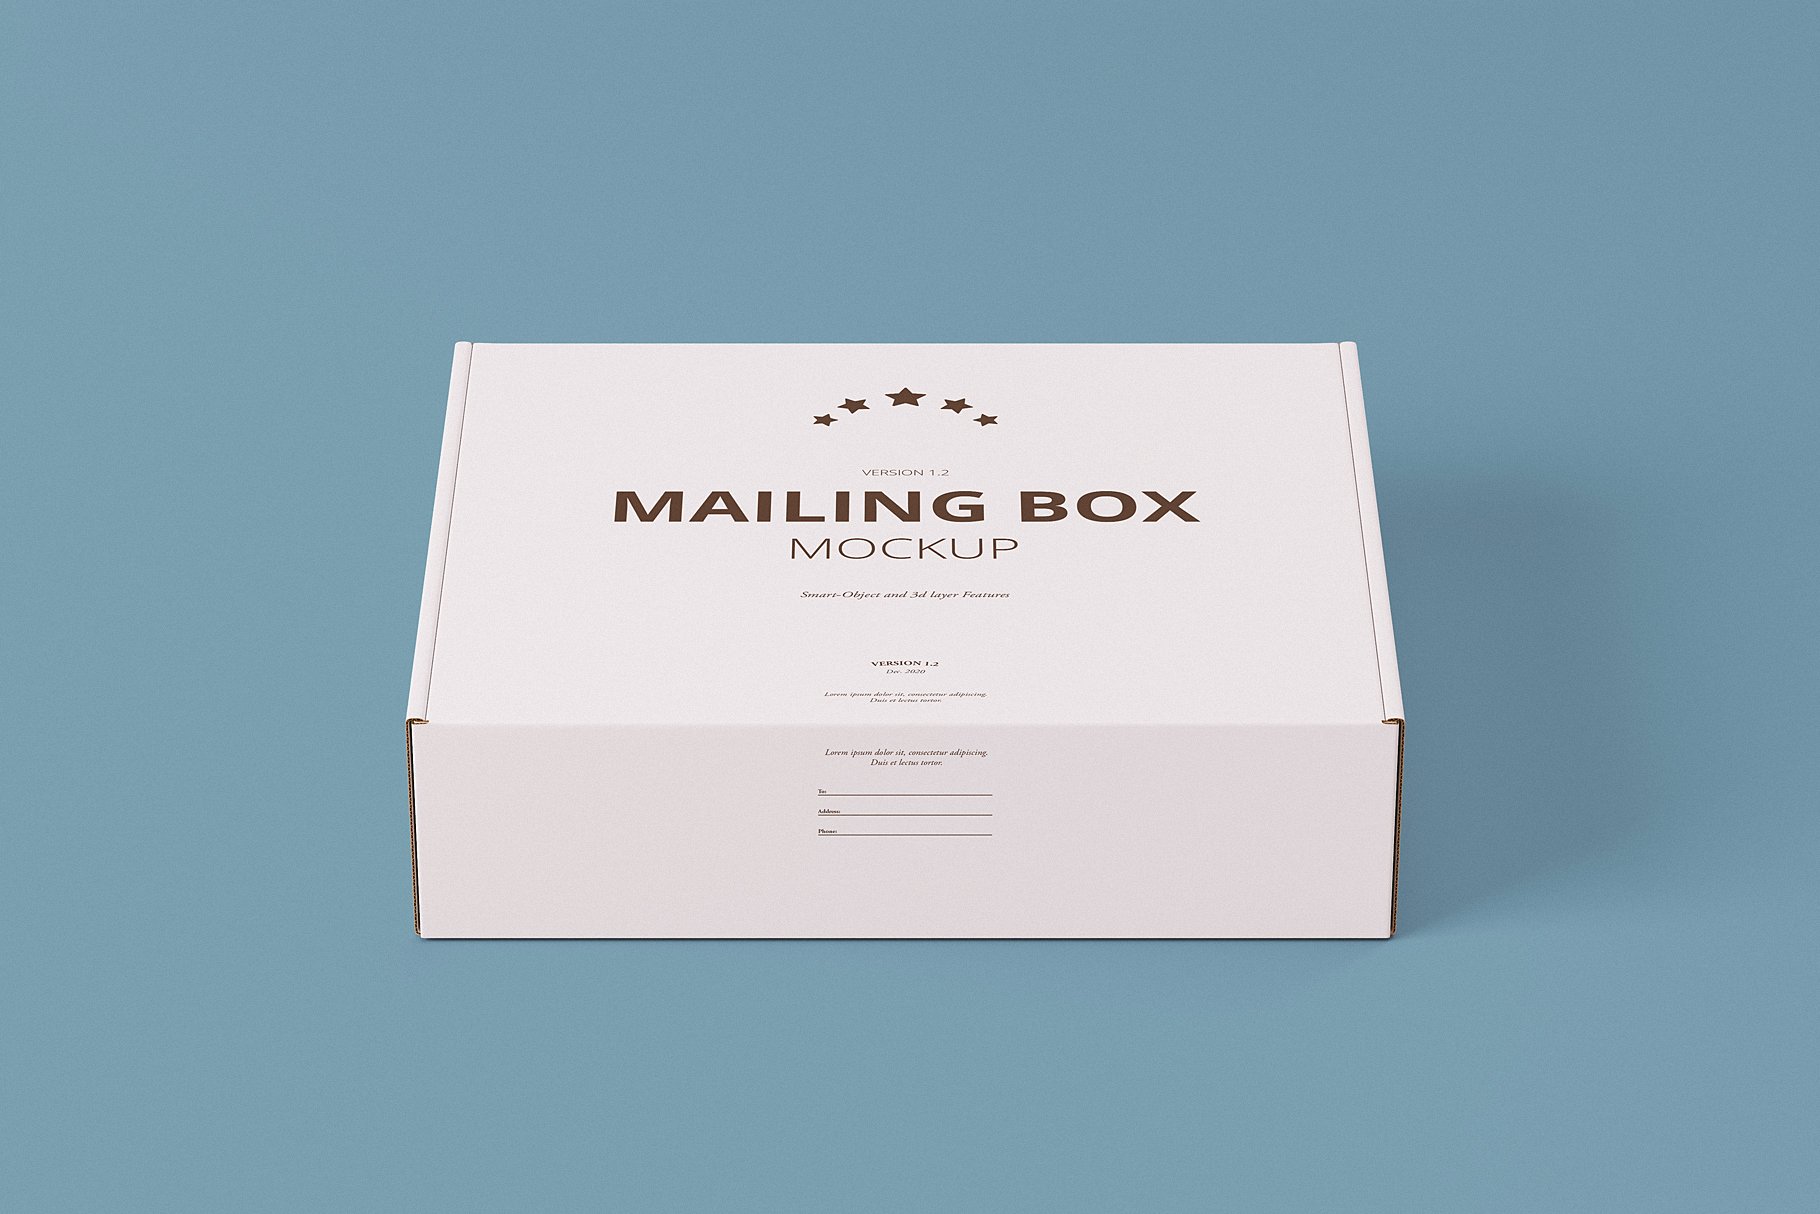 mailing box mockup 05 52